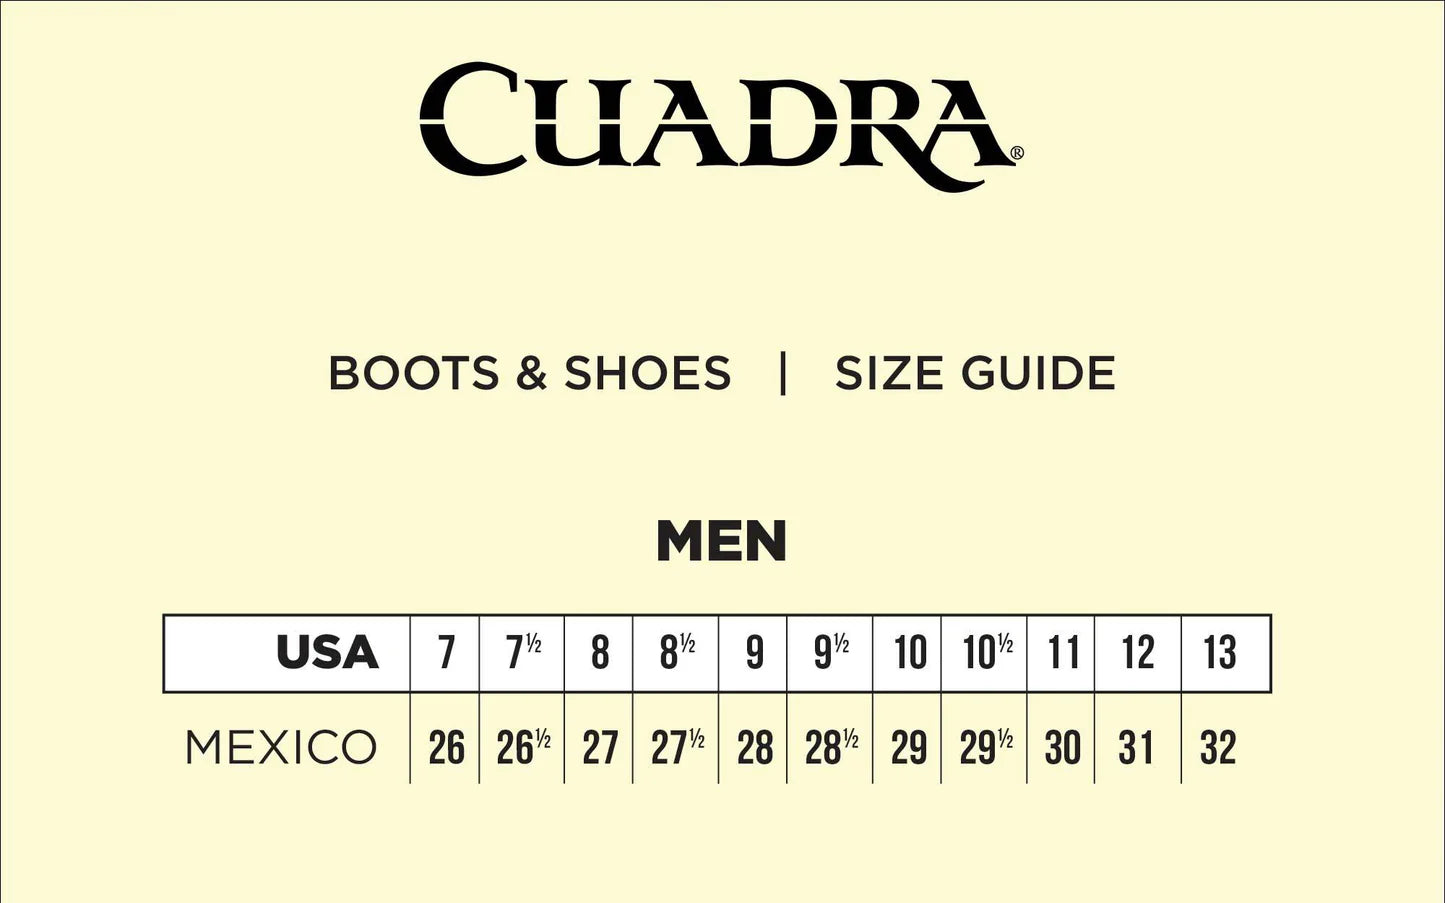 cuadra_sizeguide_boots_men_jpg_51a9fafb-70cb-4c32-91dd-c723c0c6891e.webp